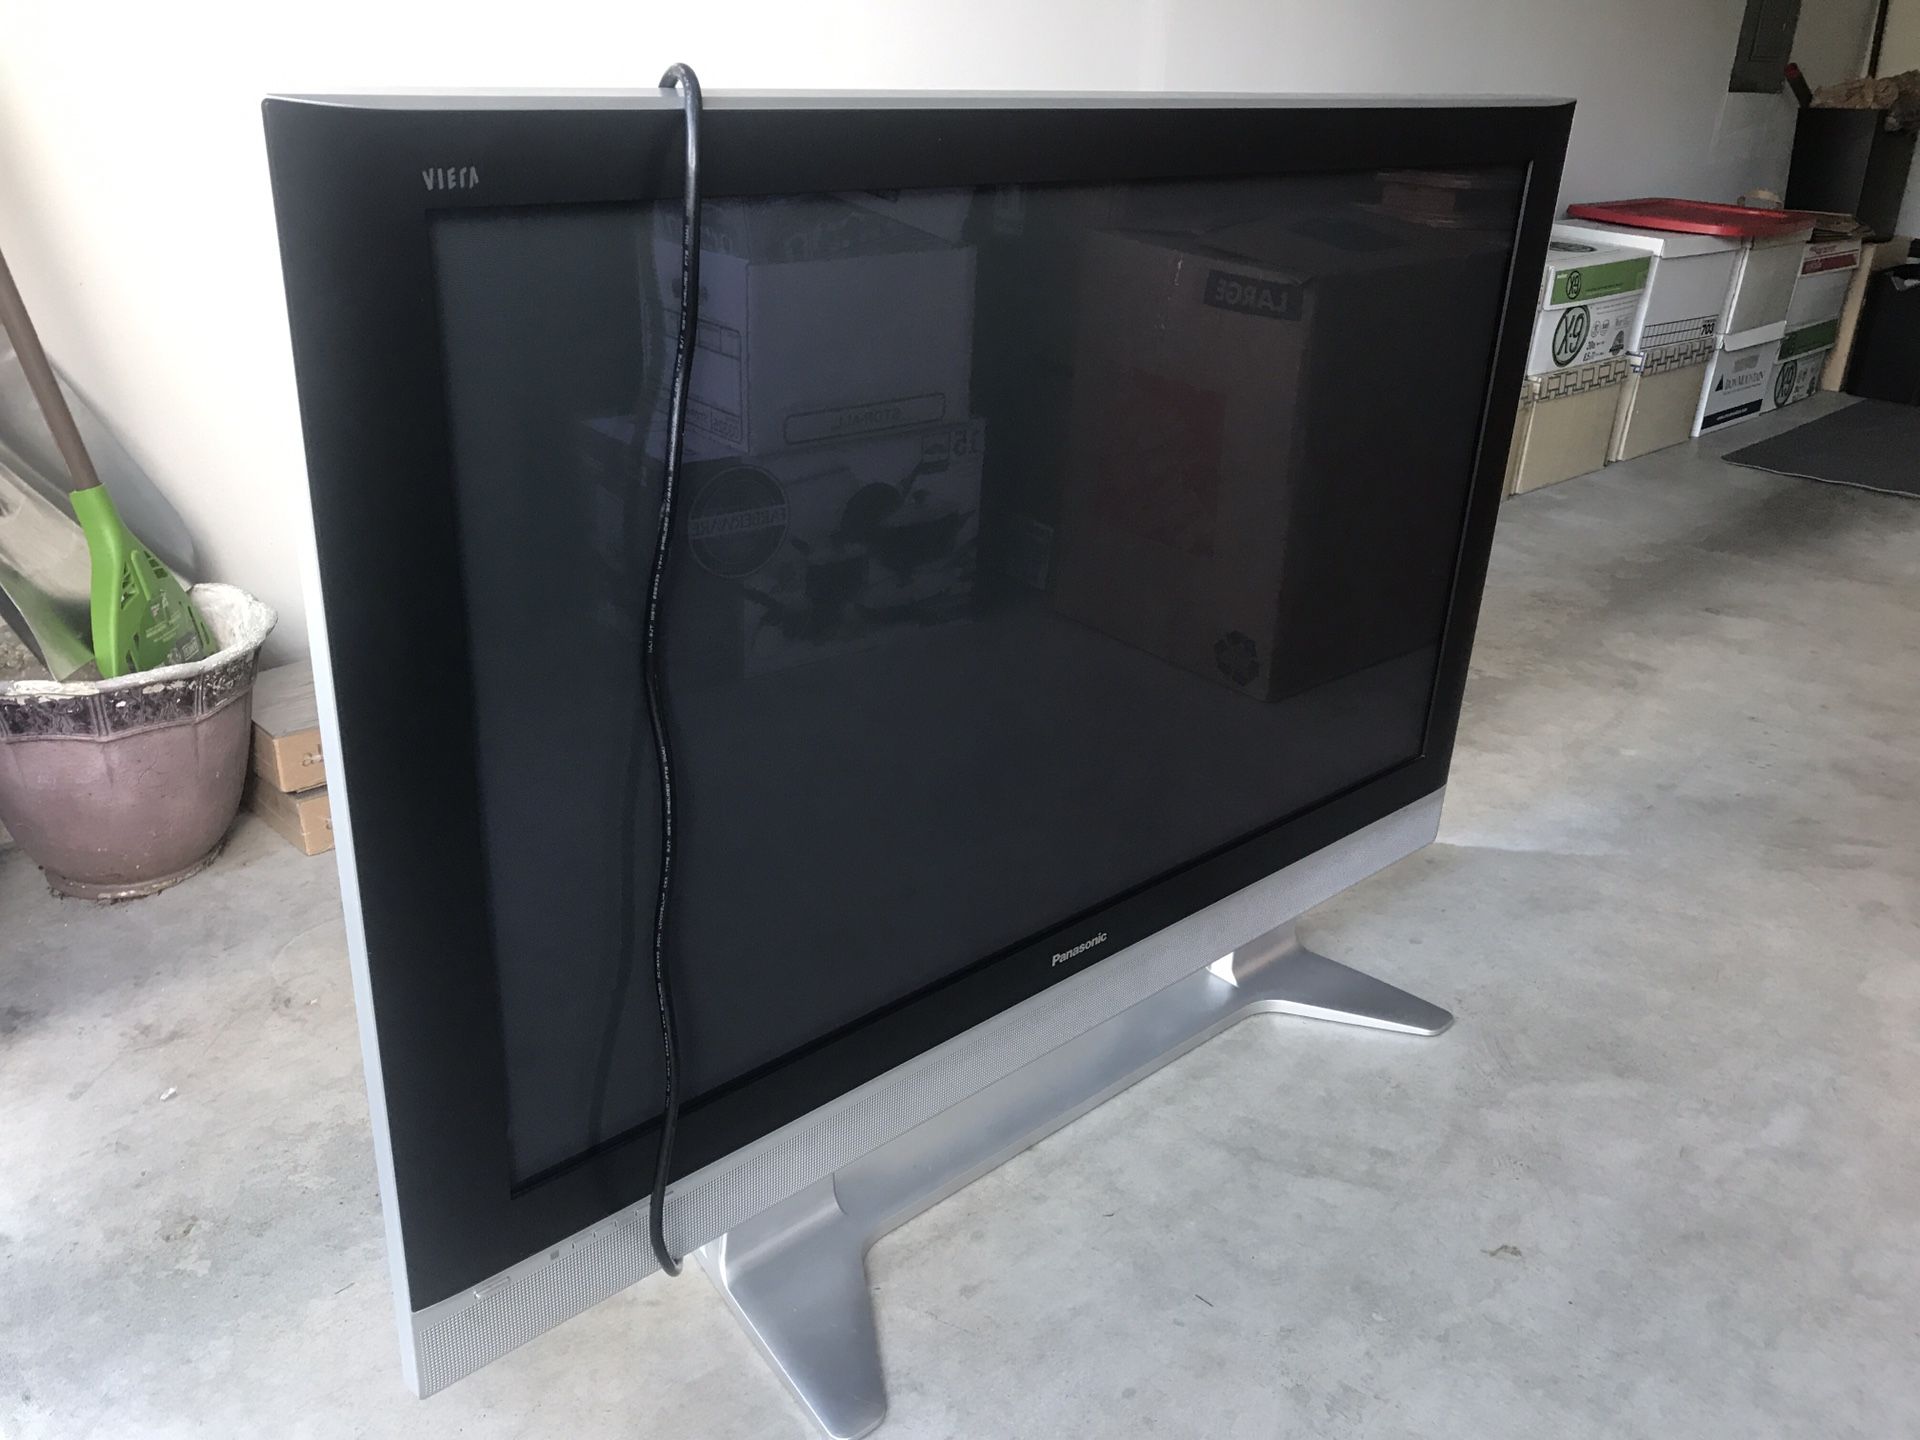 50 inch Panasonic Plasma TV - In REDMOND.